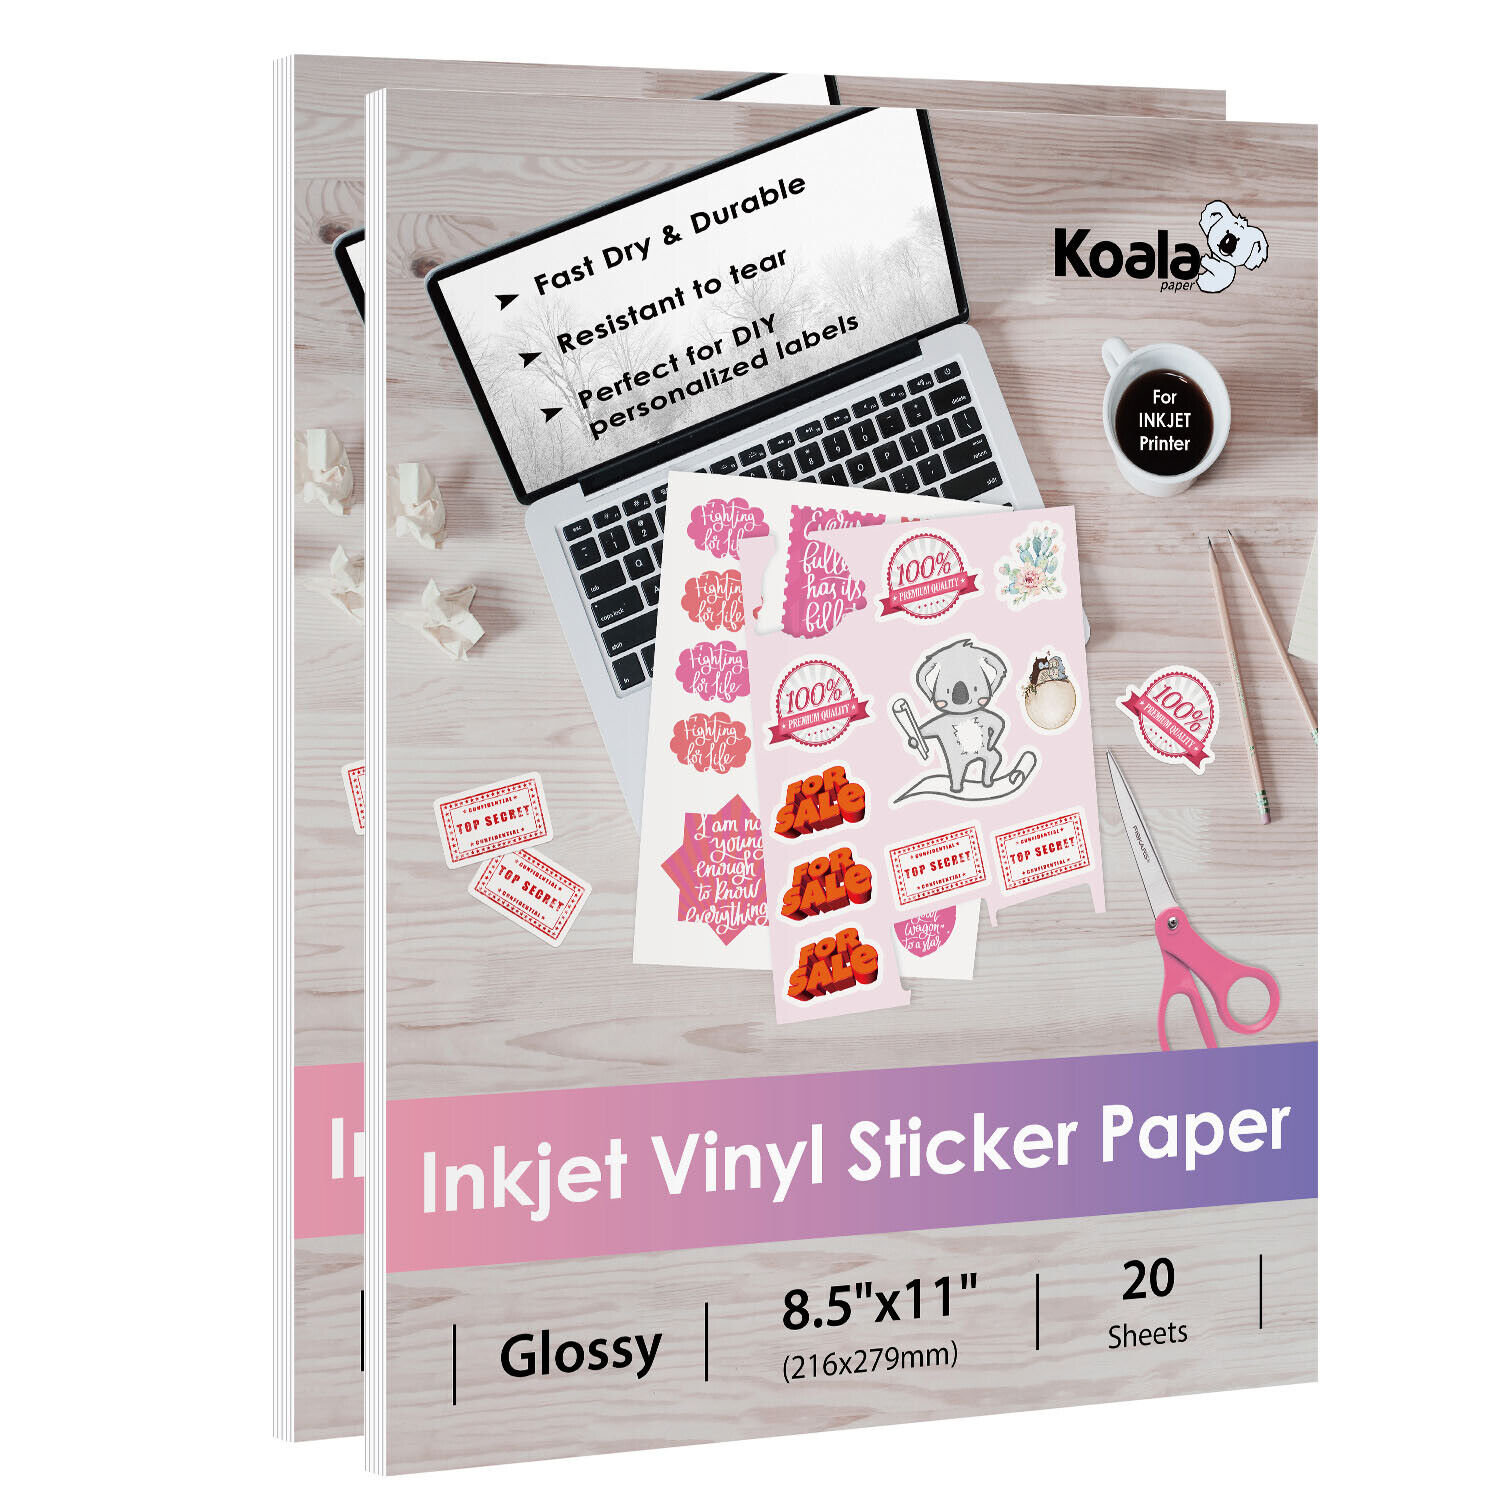 40 Full Sheets Printable Vinyl Sticker Paper Waterproof Glossy Inkjet Printer